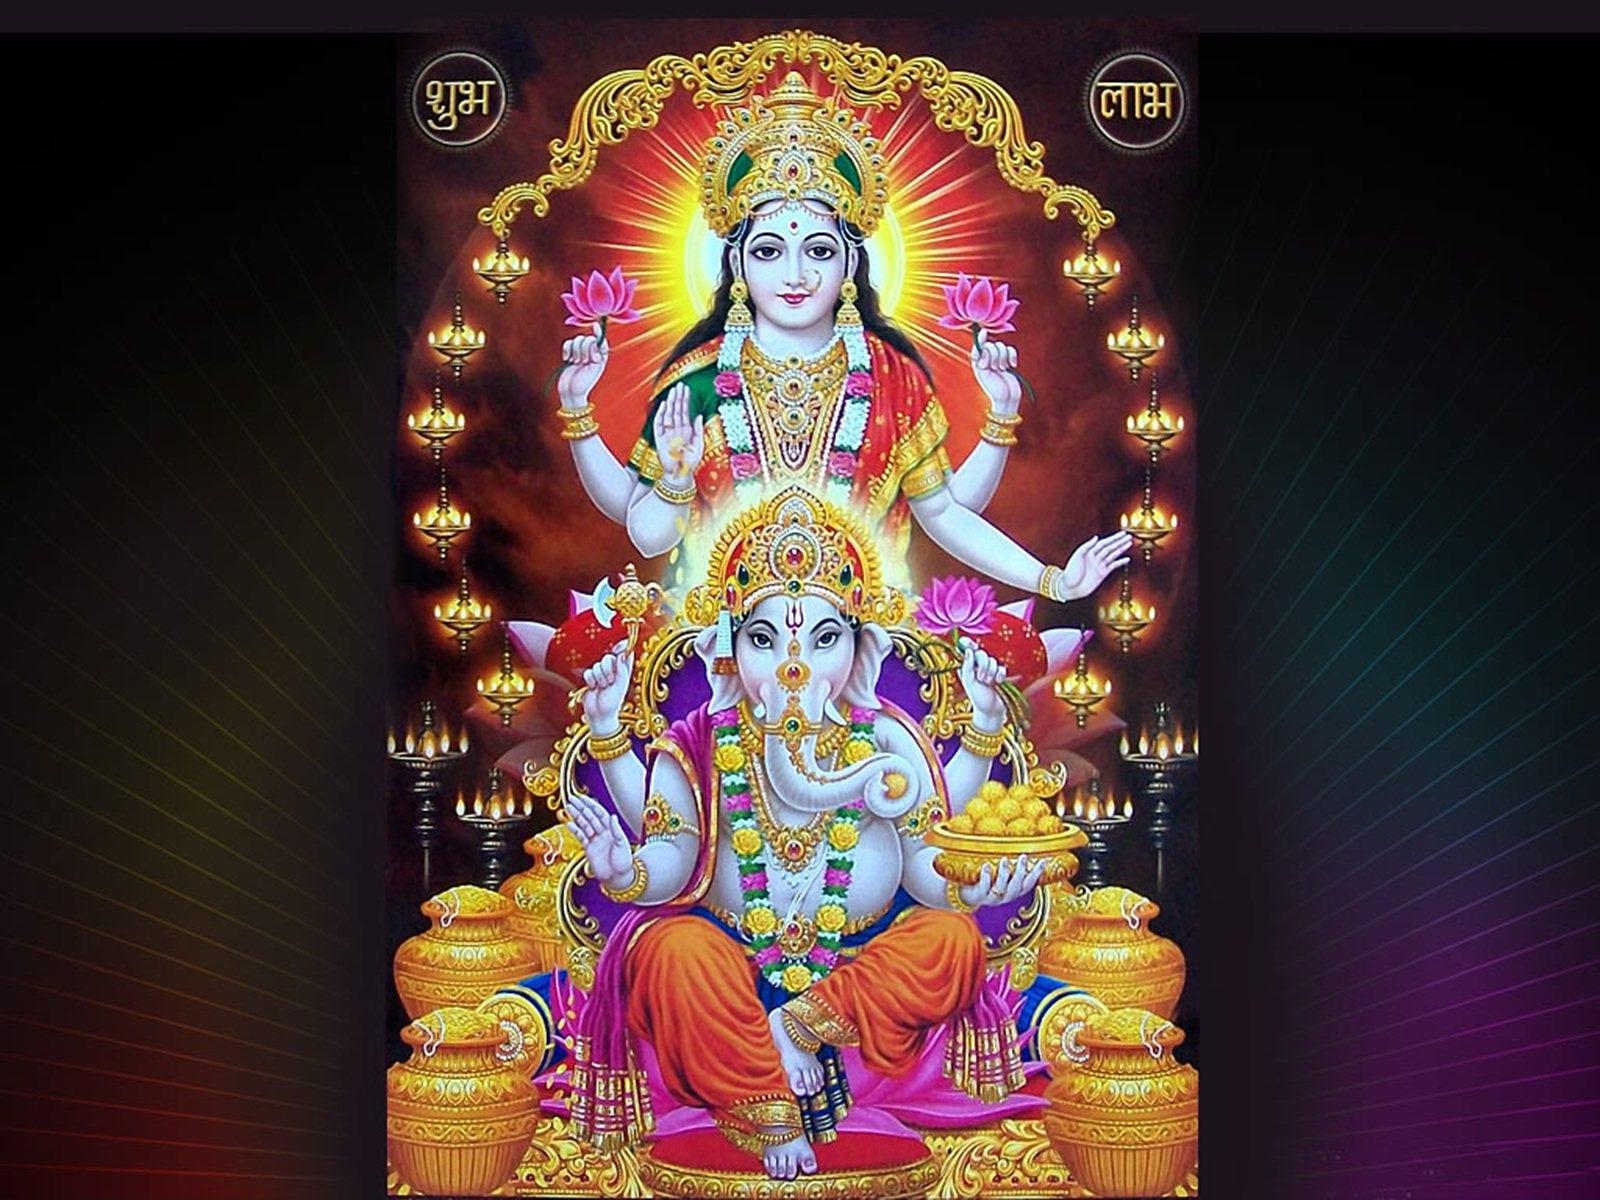 Download Free HD Wallpaper of Maa laxmi(lakshmi) Devi. Maa